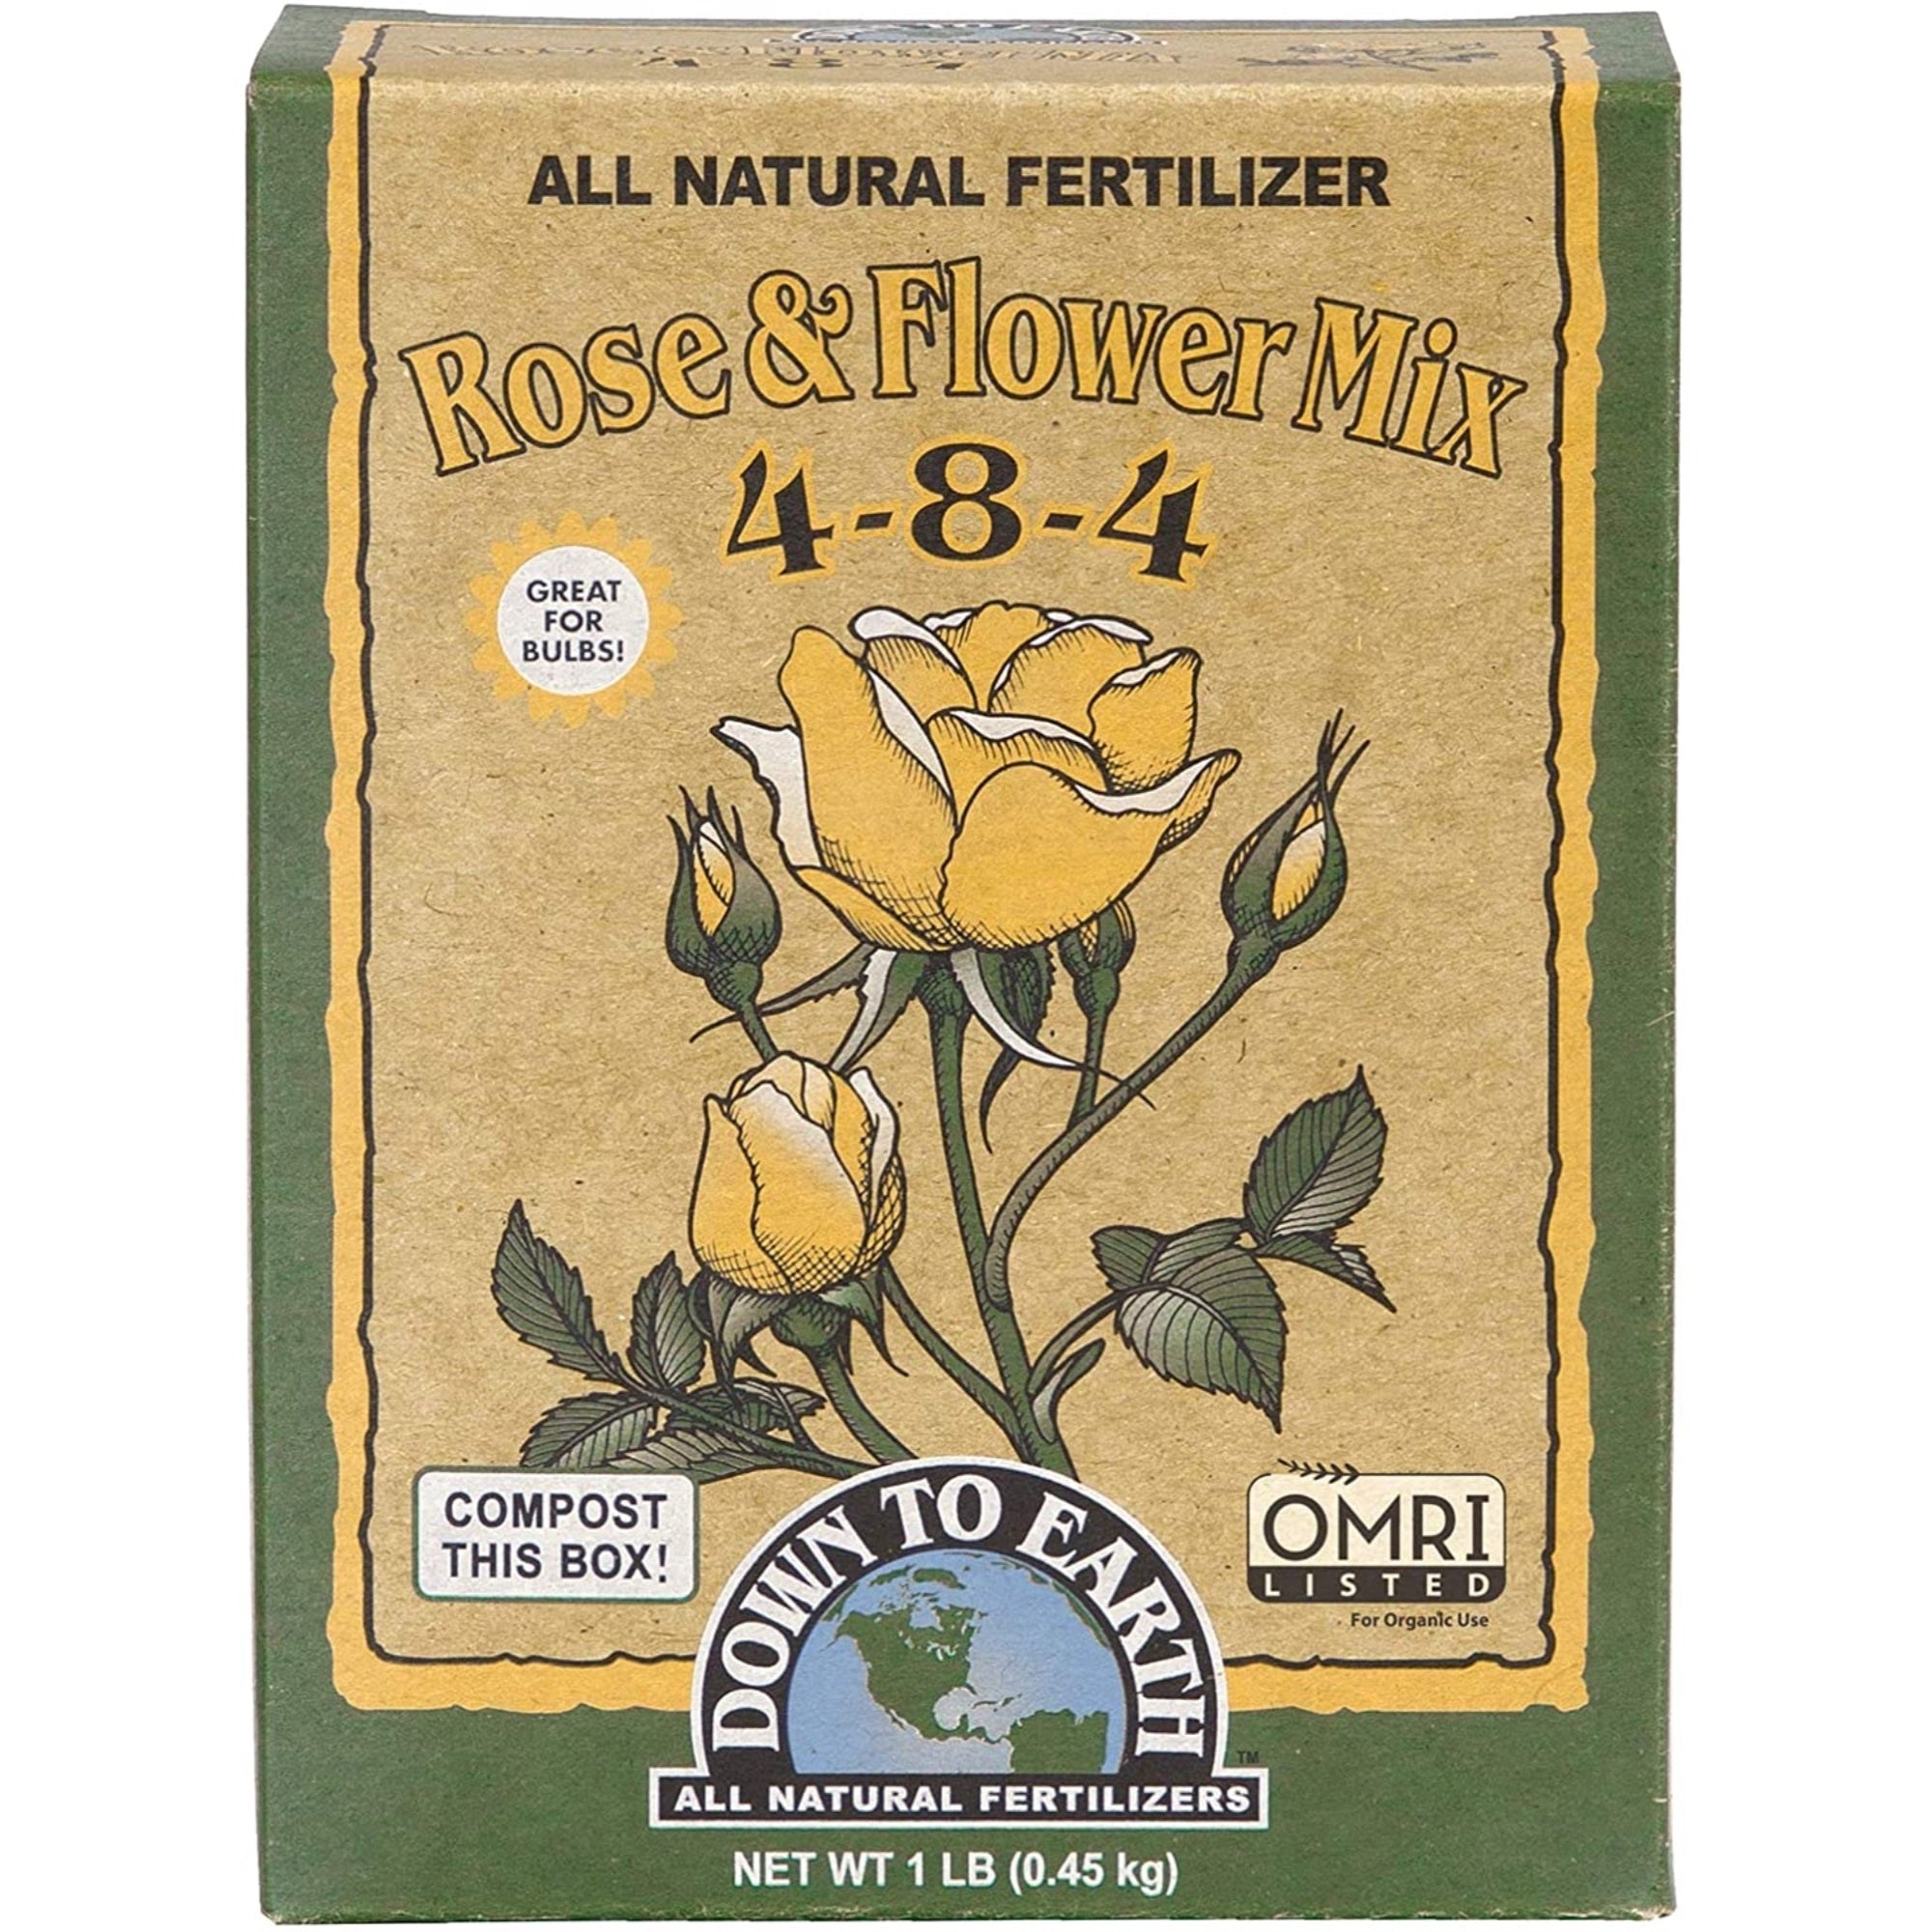 Down to Earth Rose & Flower Mix Fertilizers Blend 4-8-4, 1 lb box